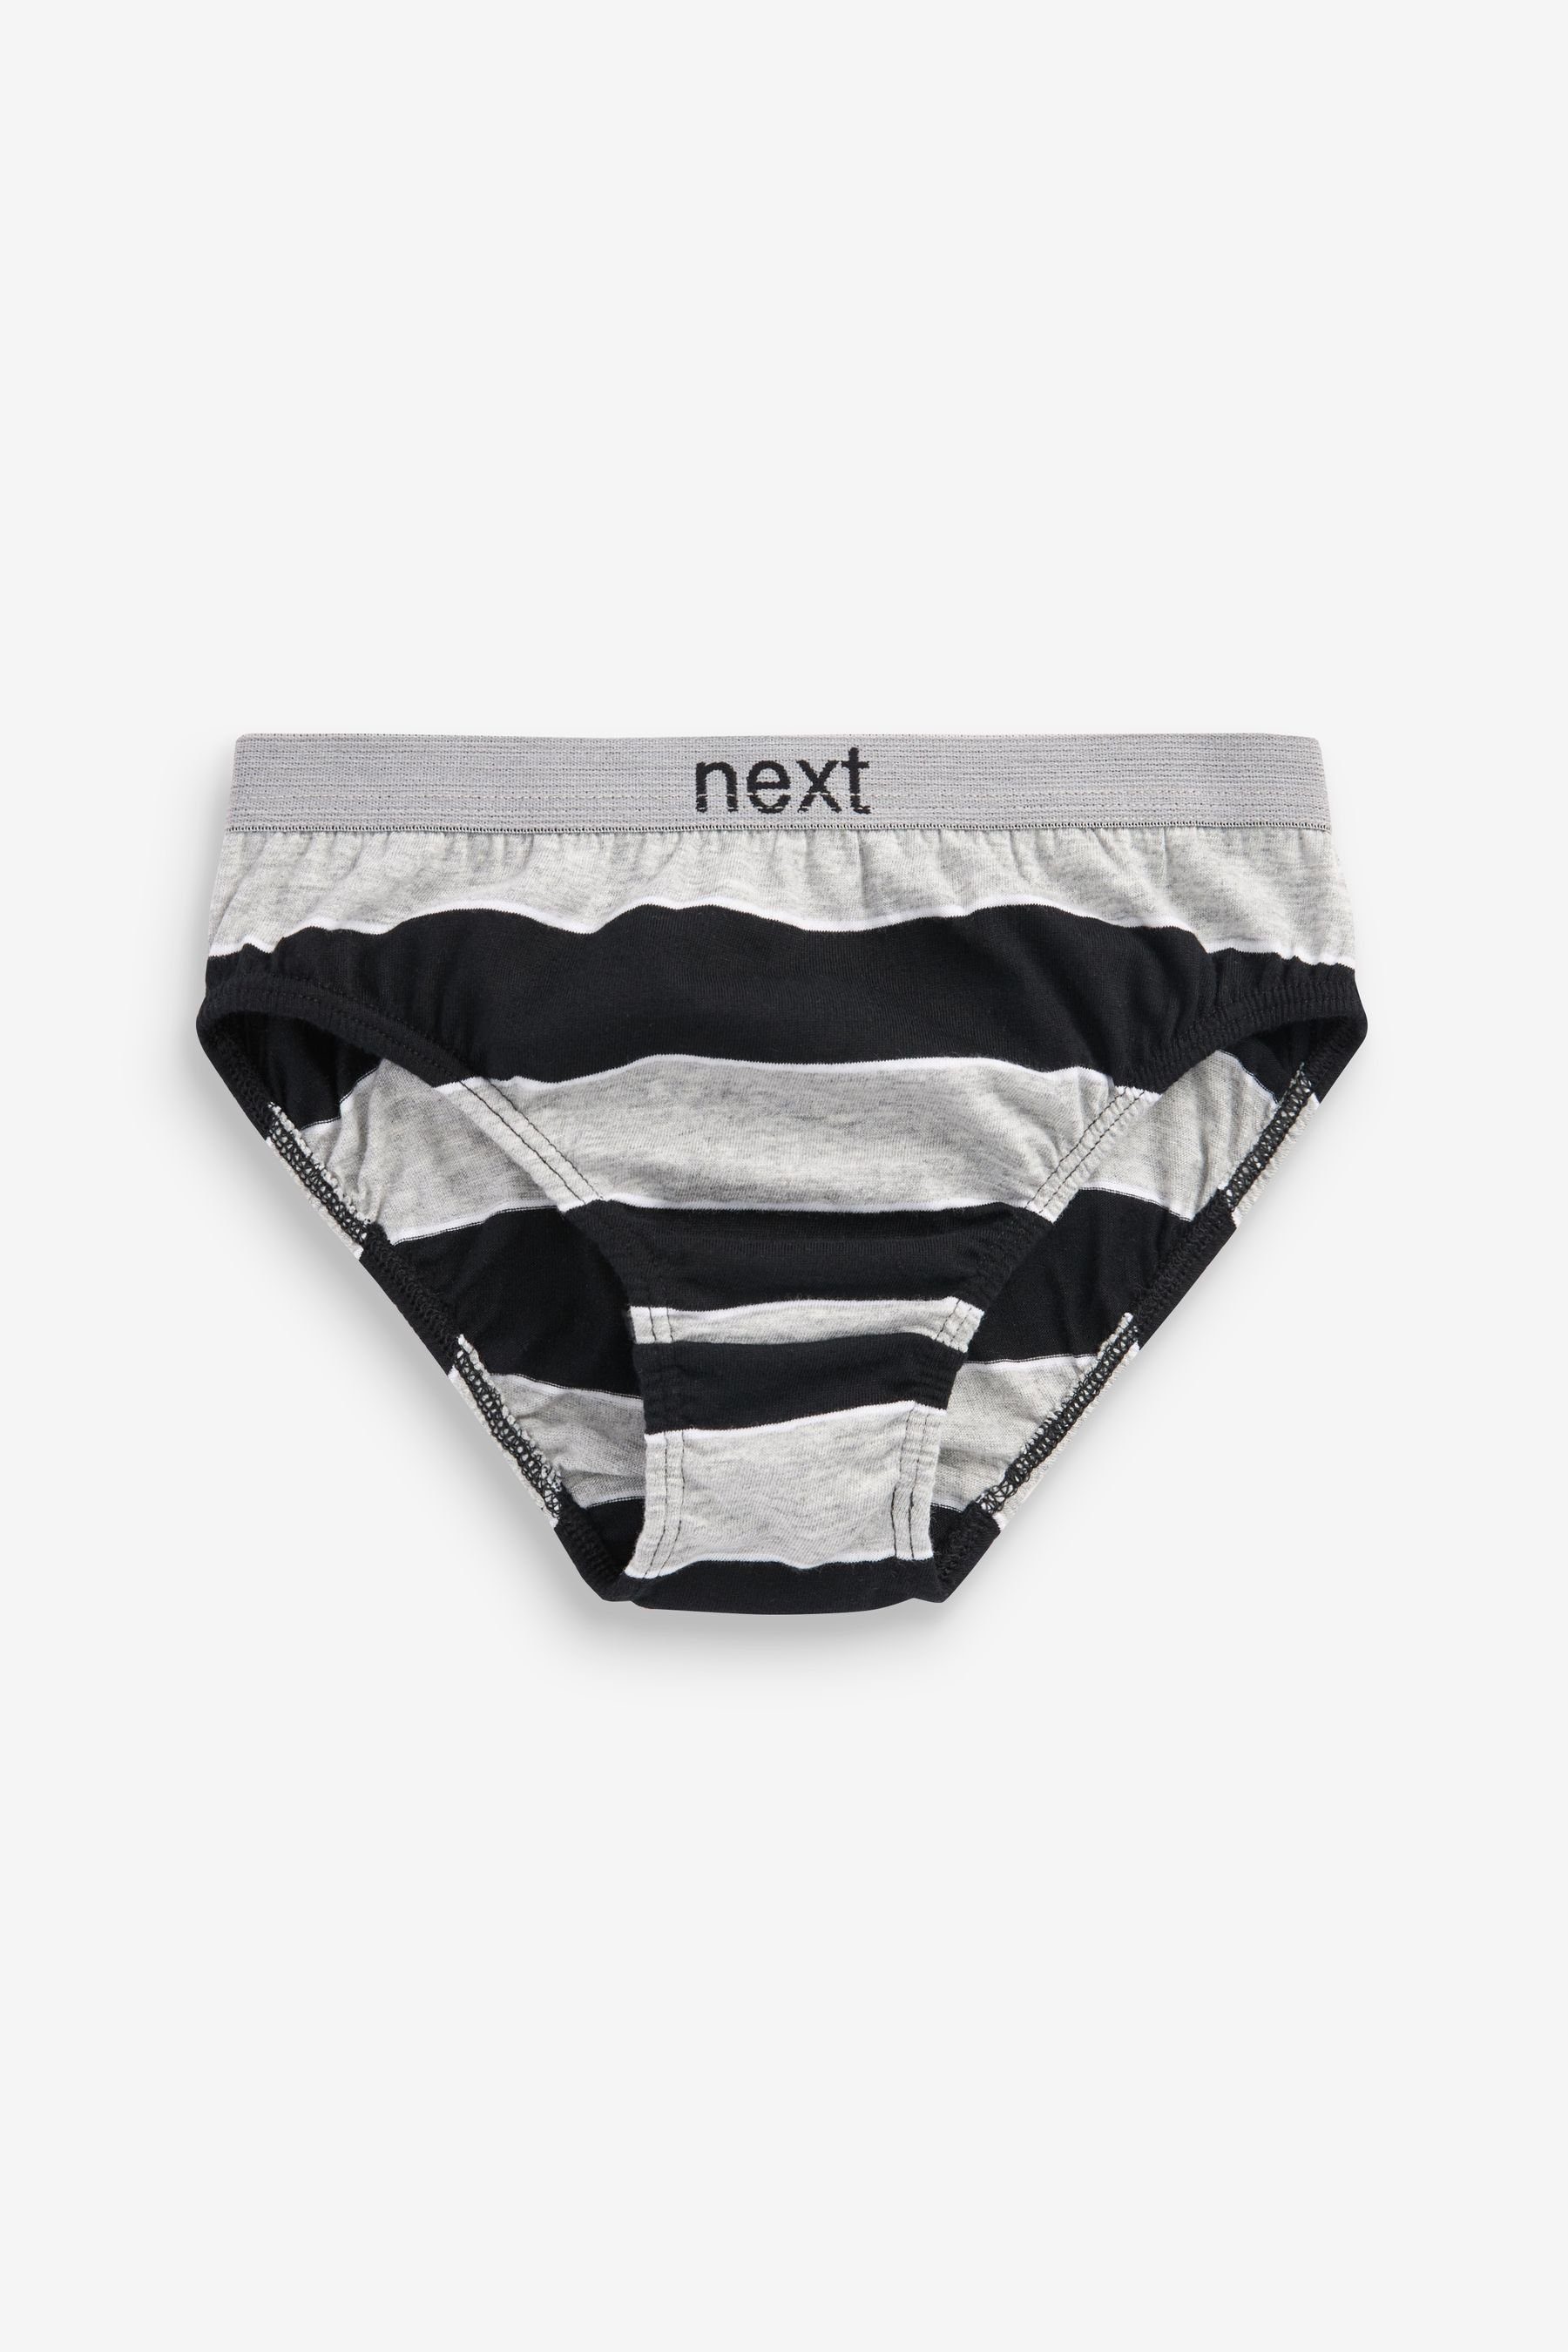 Stripe im Black/White/Grey Unterhosen Slip (5-St) 5er-Pack Next